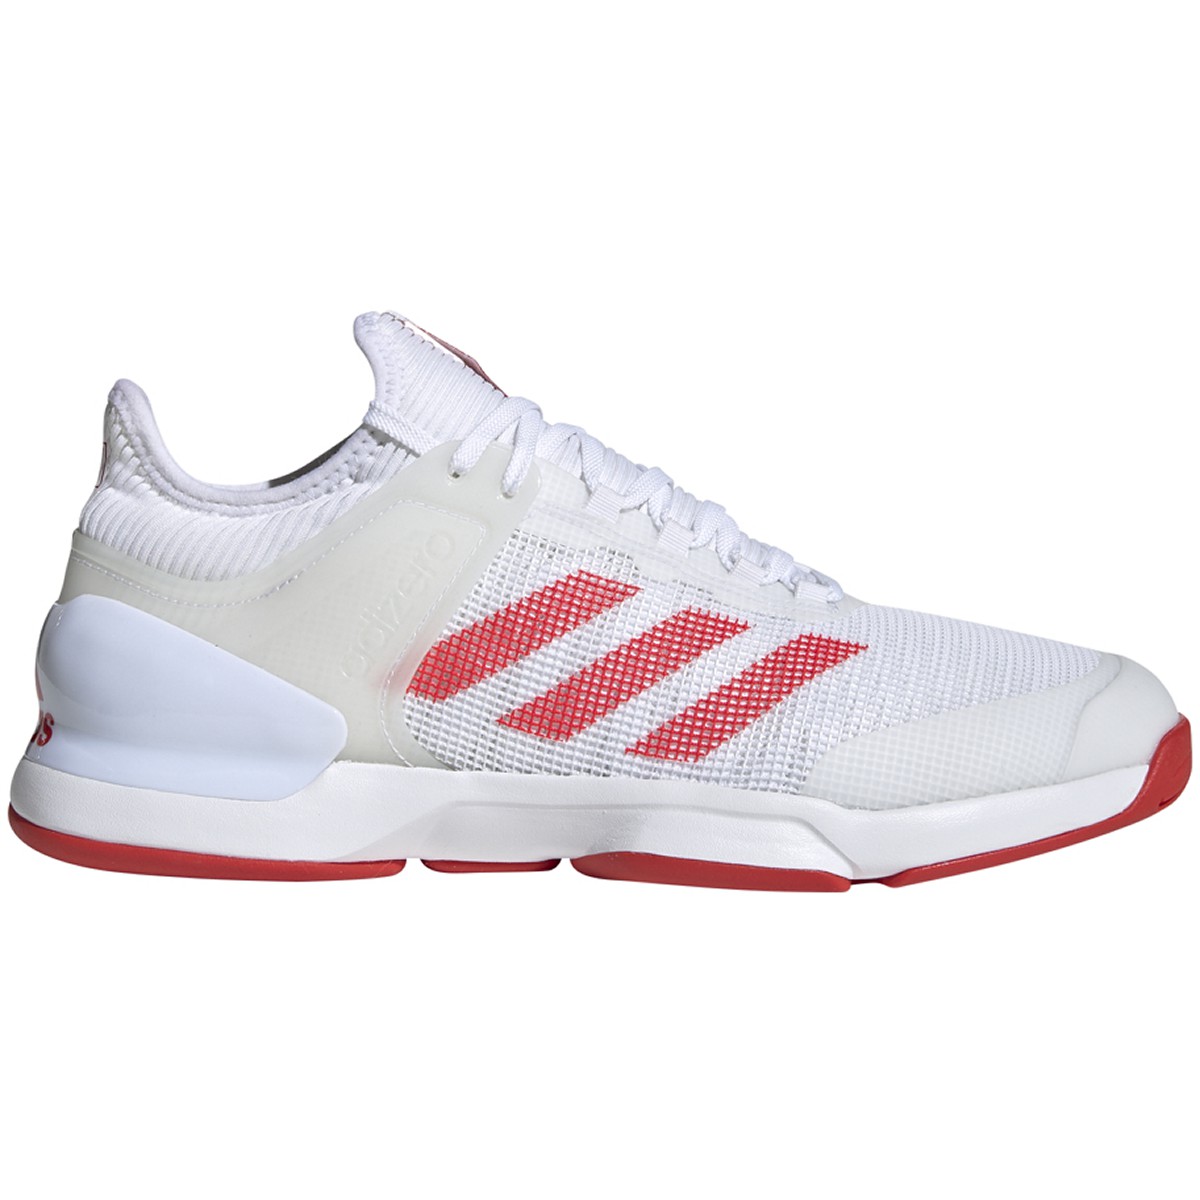 Adidas Men&amp;apos;s Adizero Ubersonic 2.0 Tennis Shoes (White/Active Red)